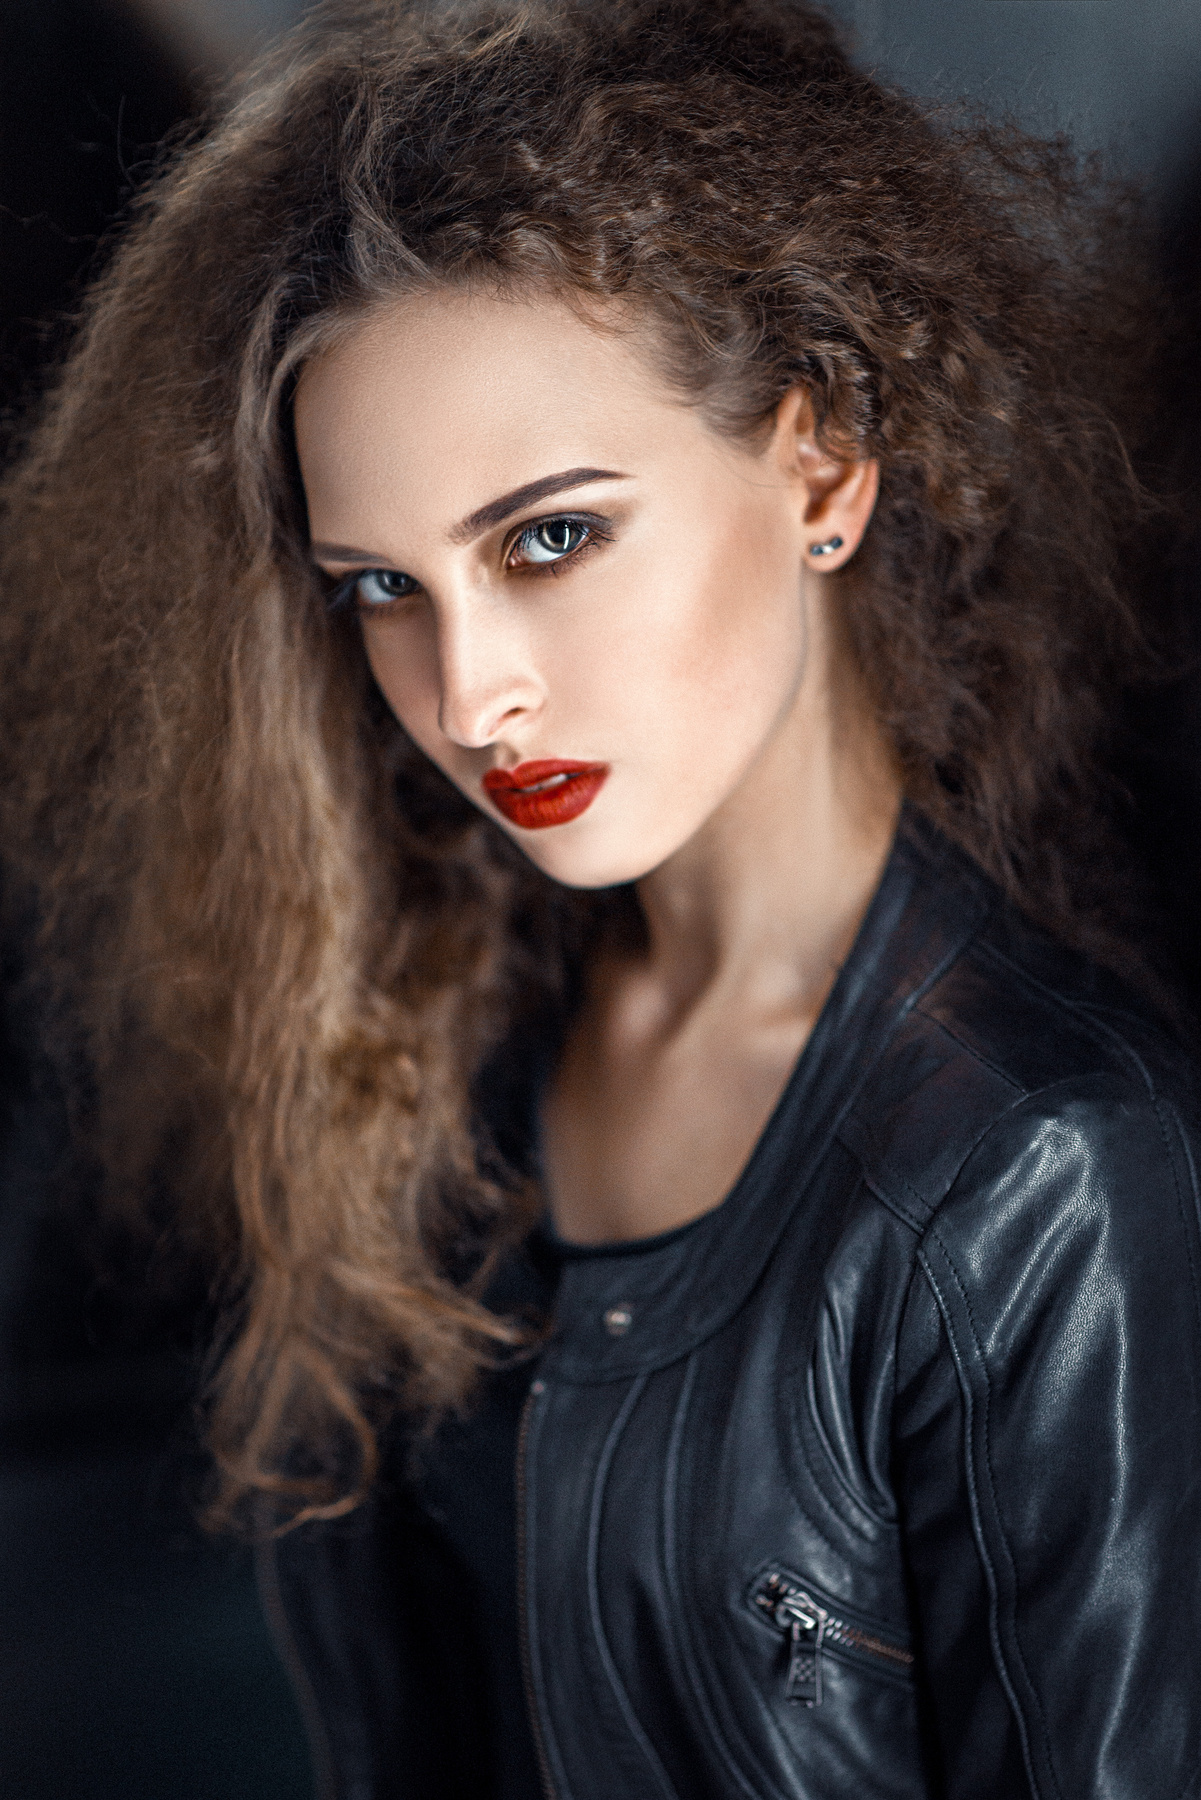 Diana модель model girl девушка визаж makeup взгляд eyes portrait портрет swarovsky